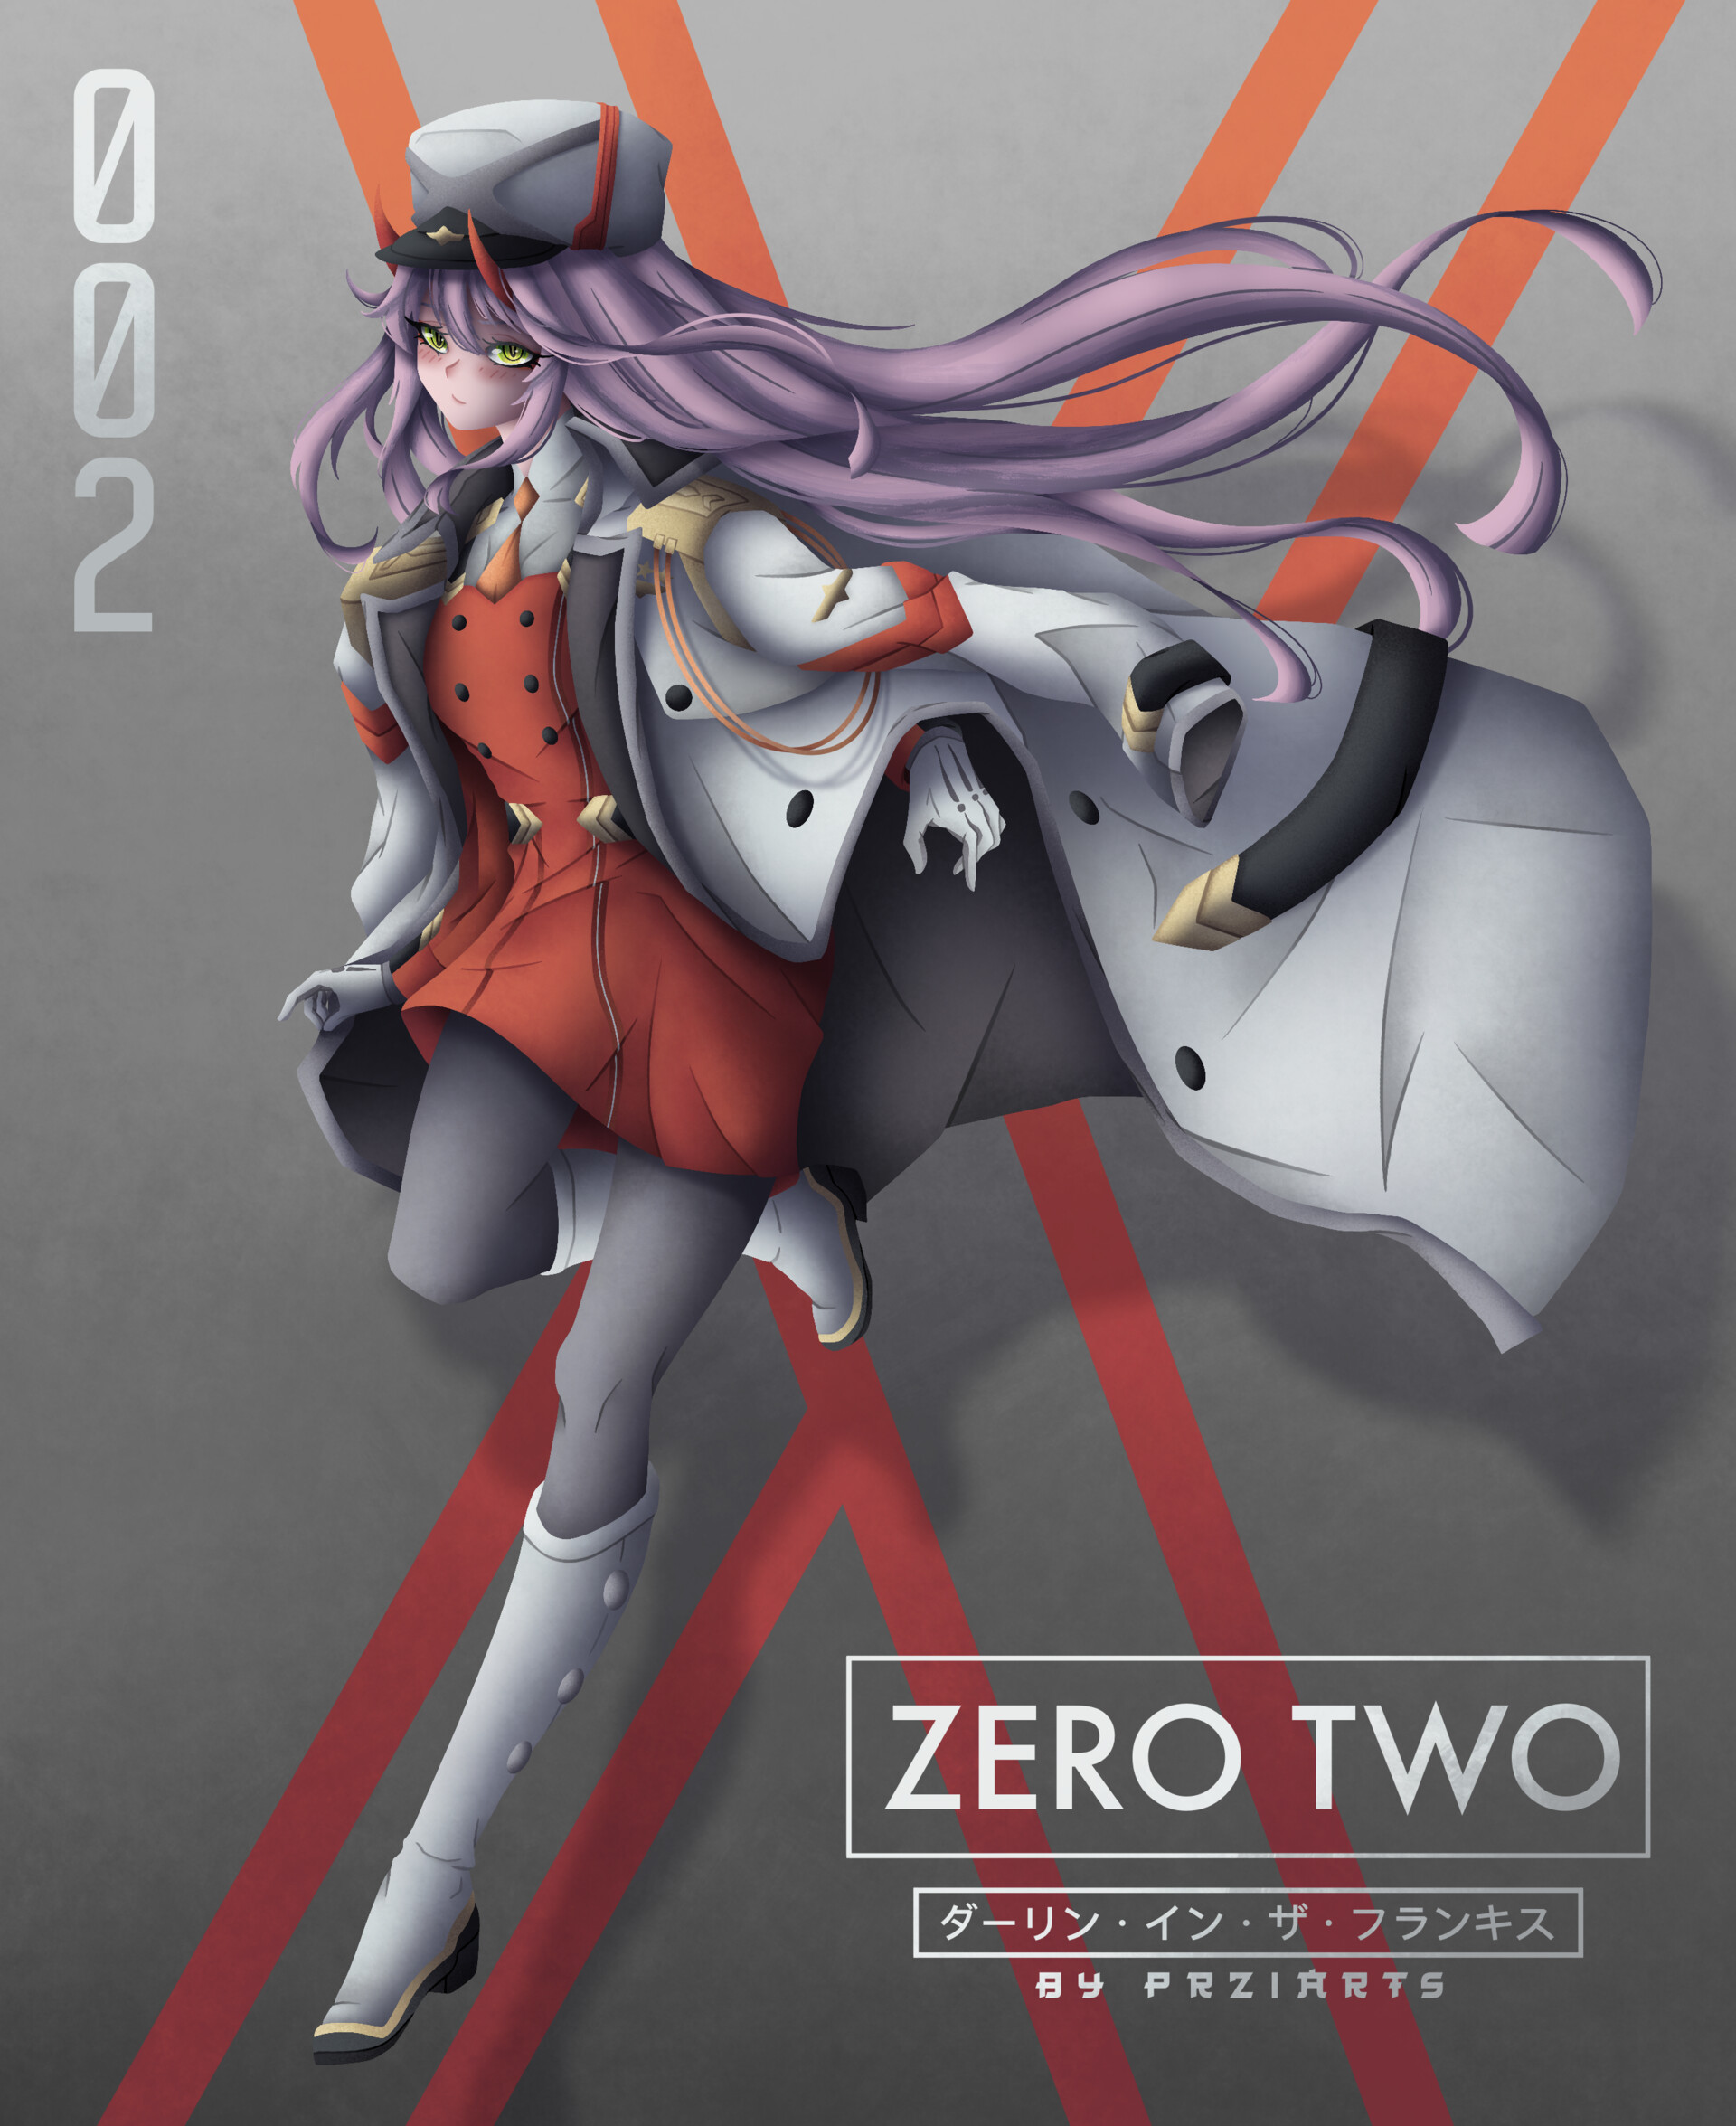 200+] Zero Two Wallpapers